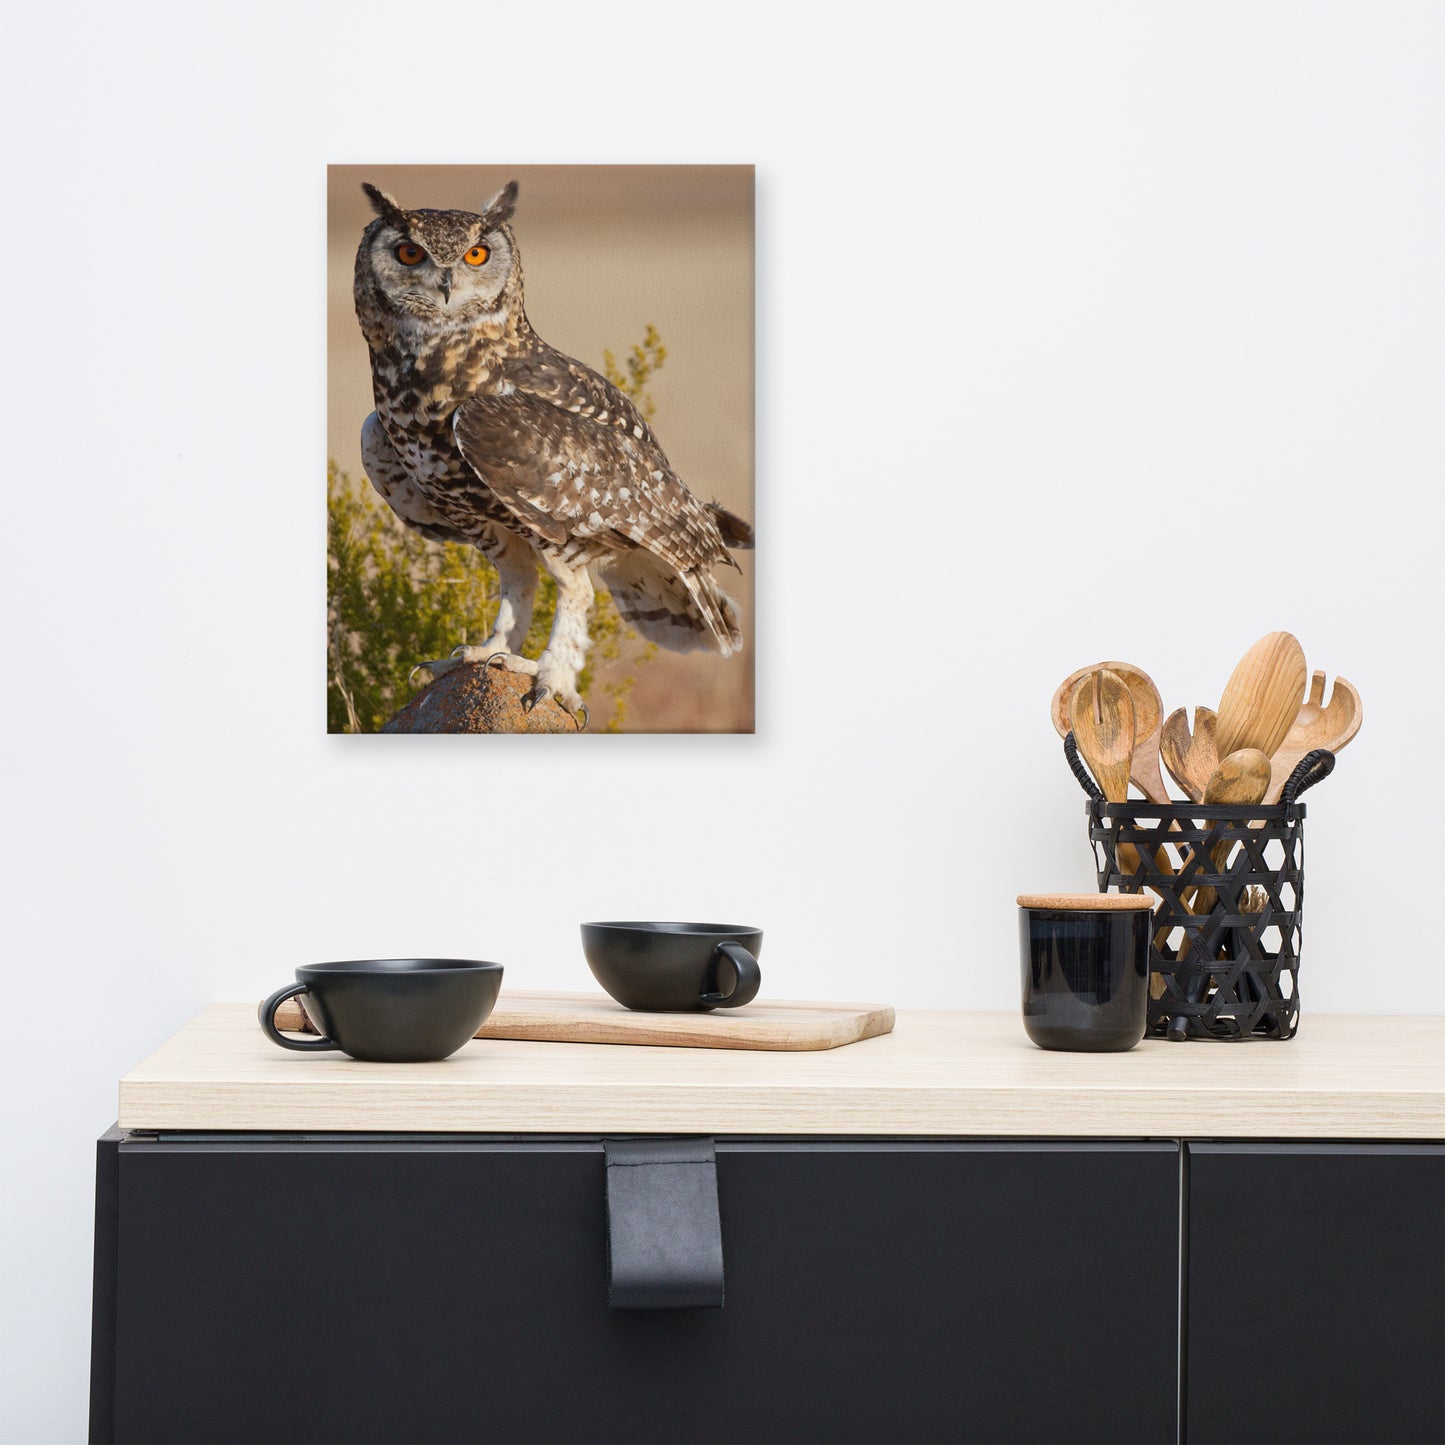 Cape Eagle Owl Wildlife Animal Photograph Canvas Wall Art Prints